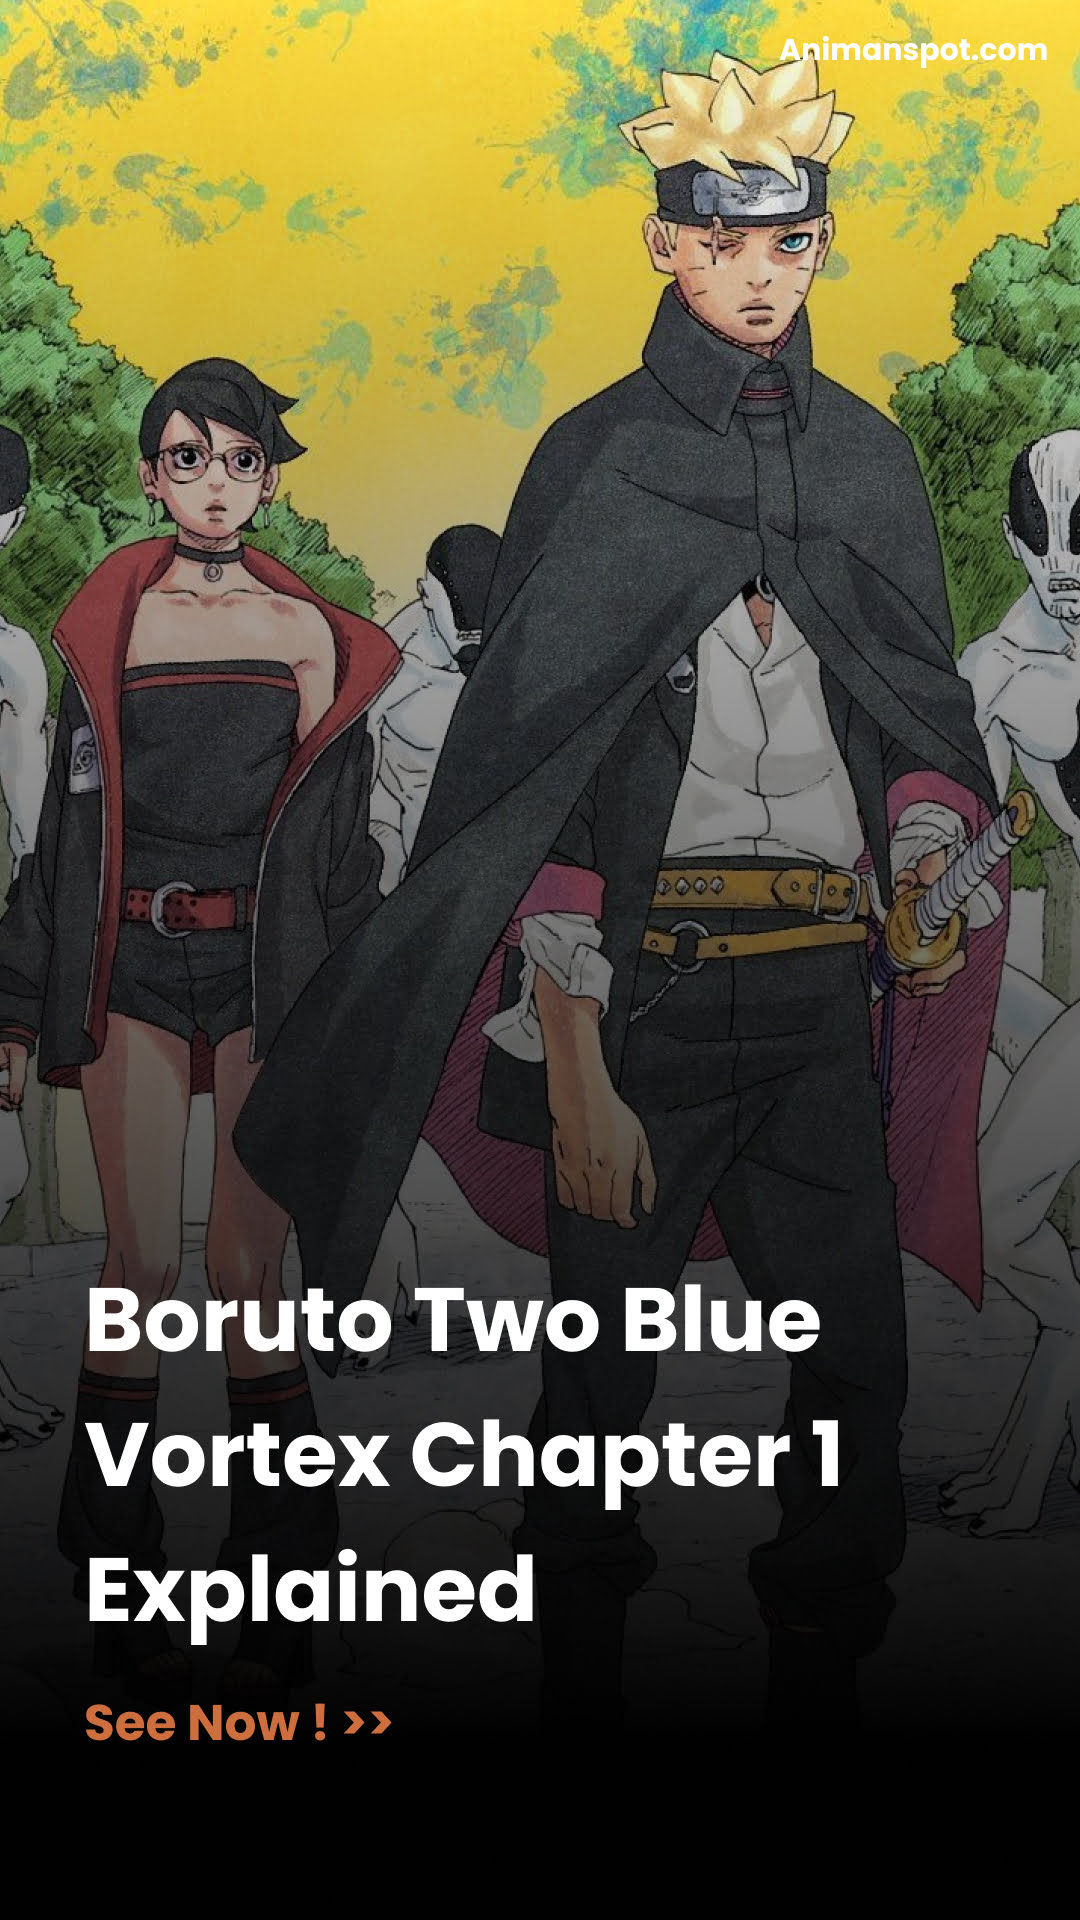 Boruto: Two Blue Vortex Chapter 1 Recap: Where's Boruto? - Siliconera